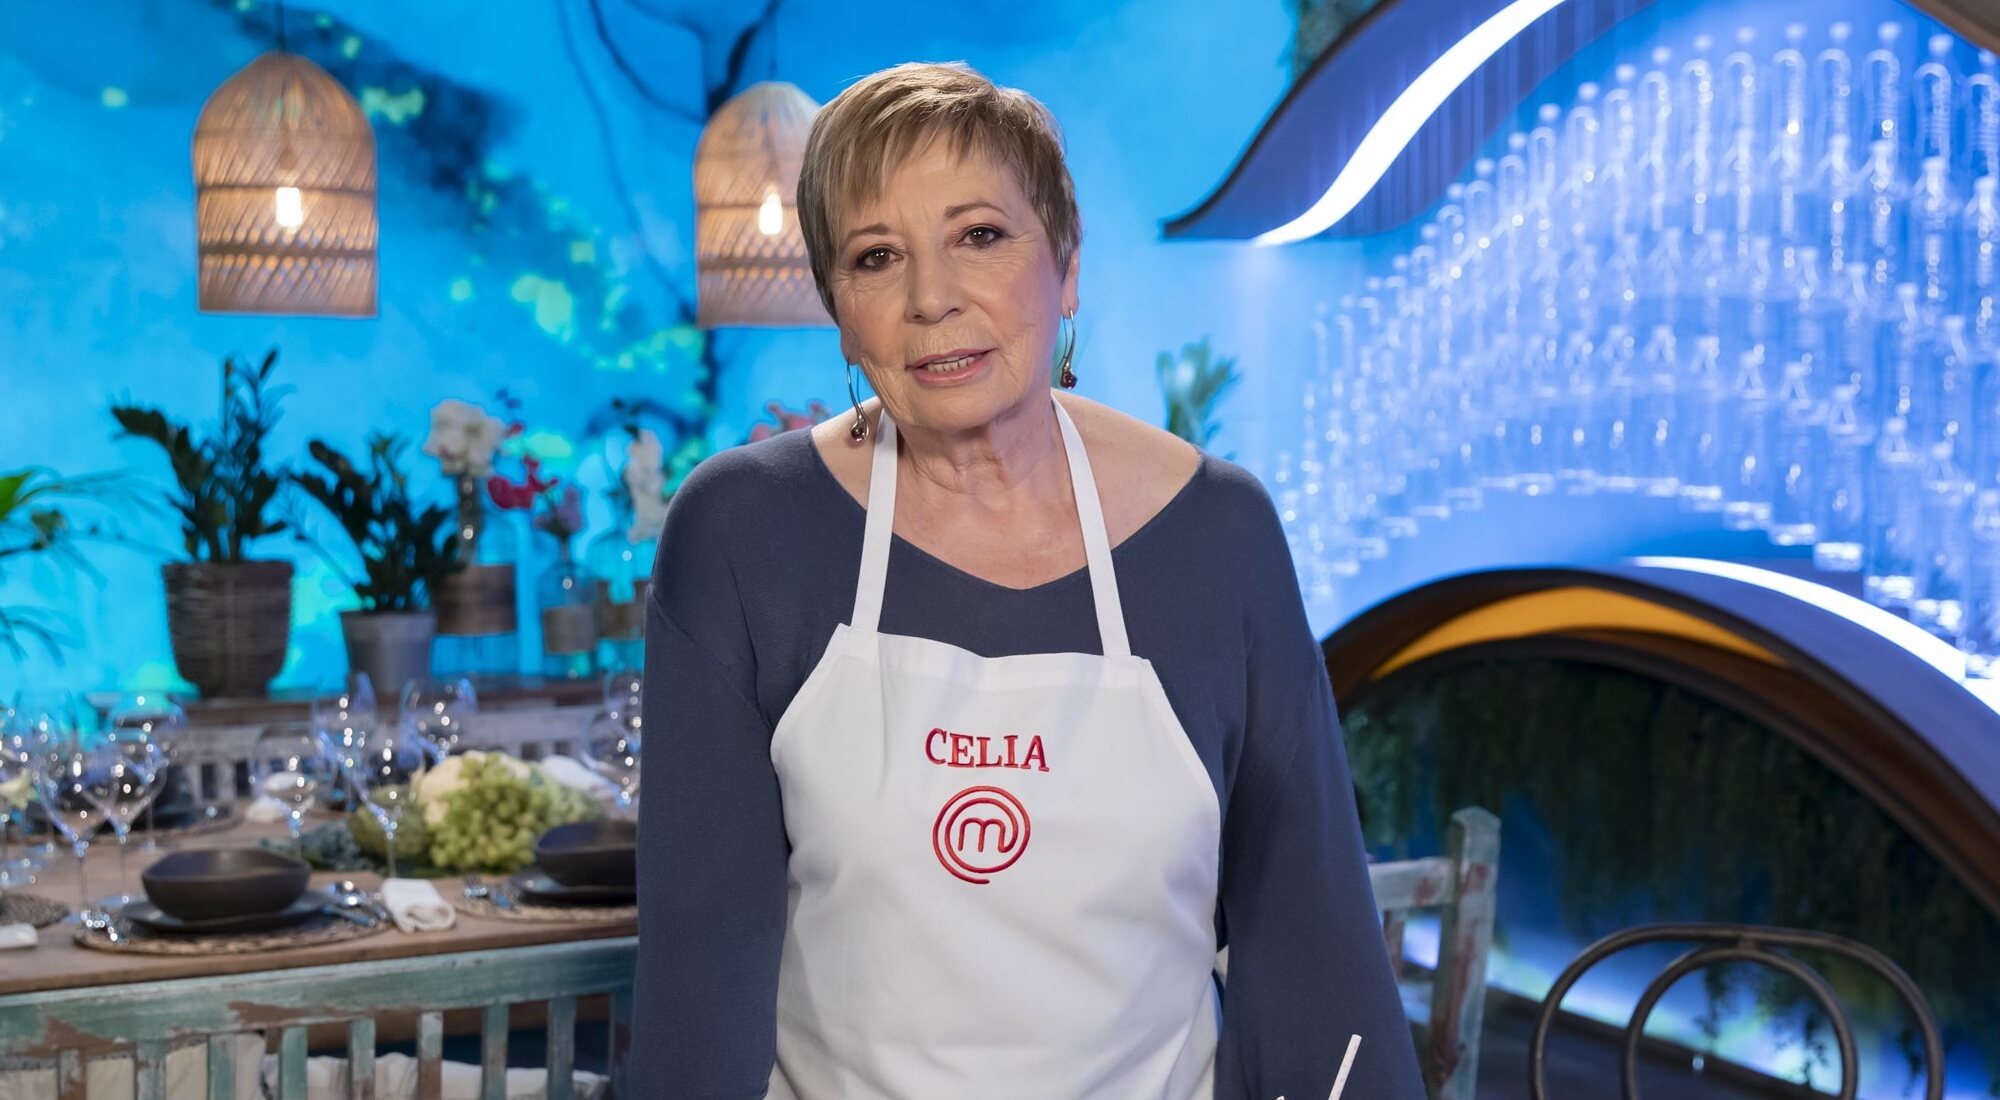 Celia VillalobOs como cncursante d 'MasterChef Celebrity'